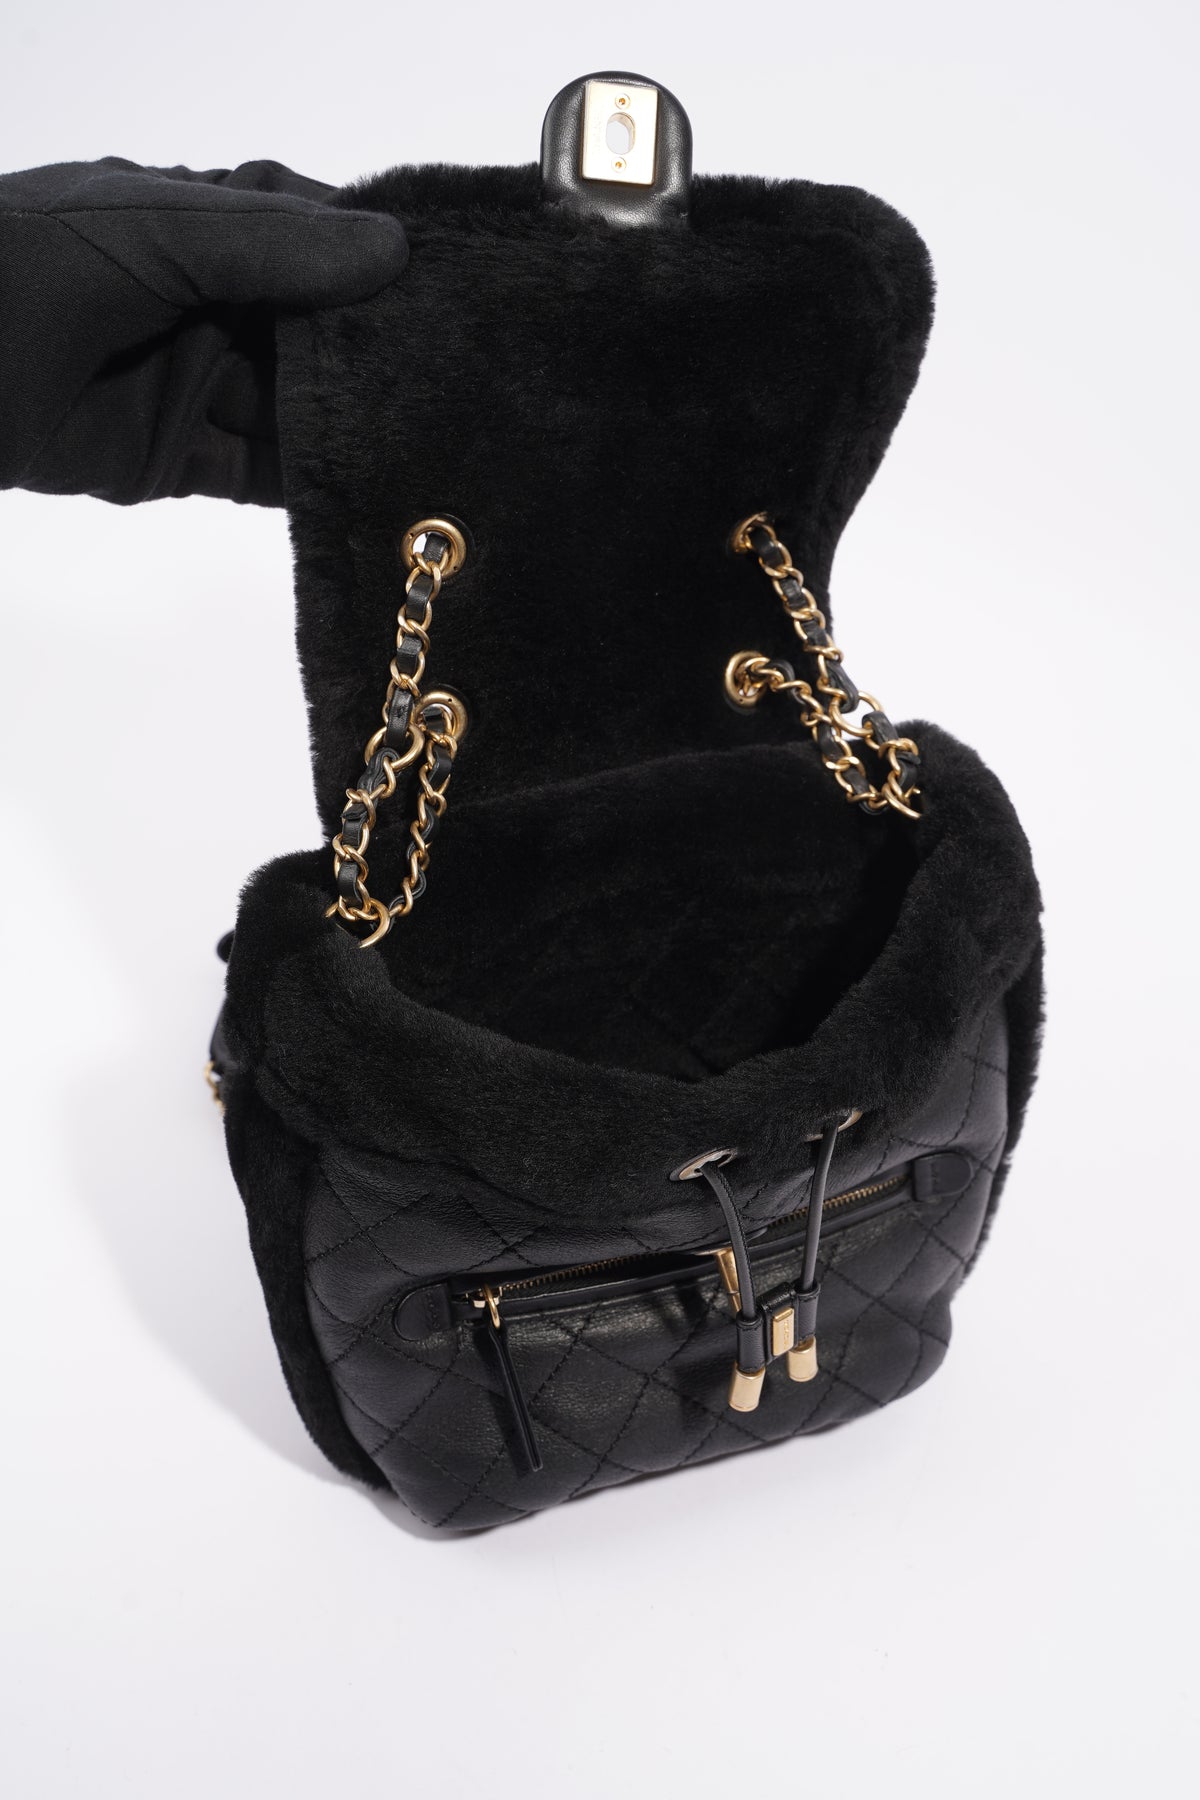 Chanel Gabrielle Shearling Lambskin Bag